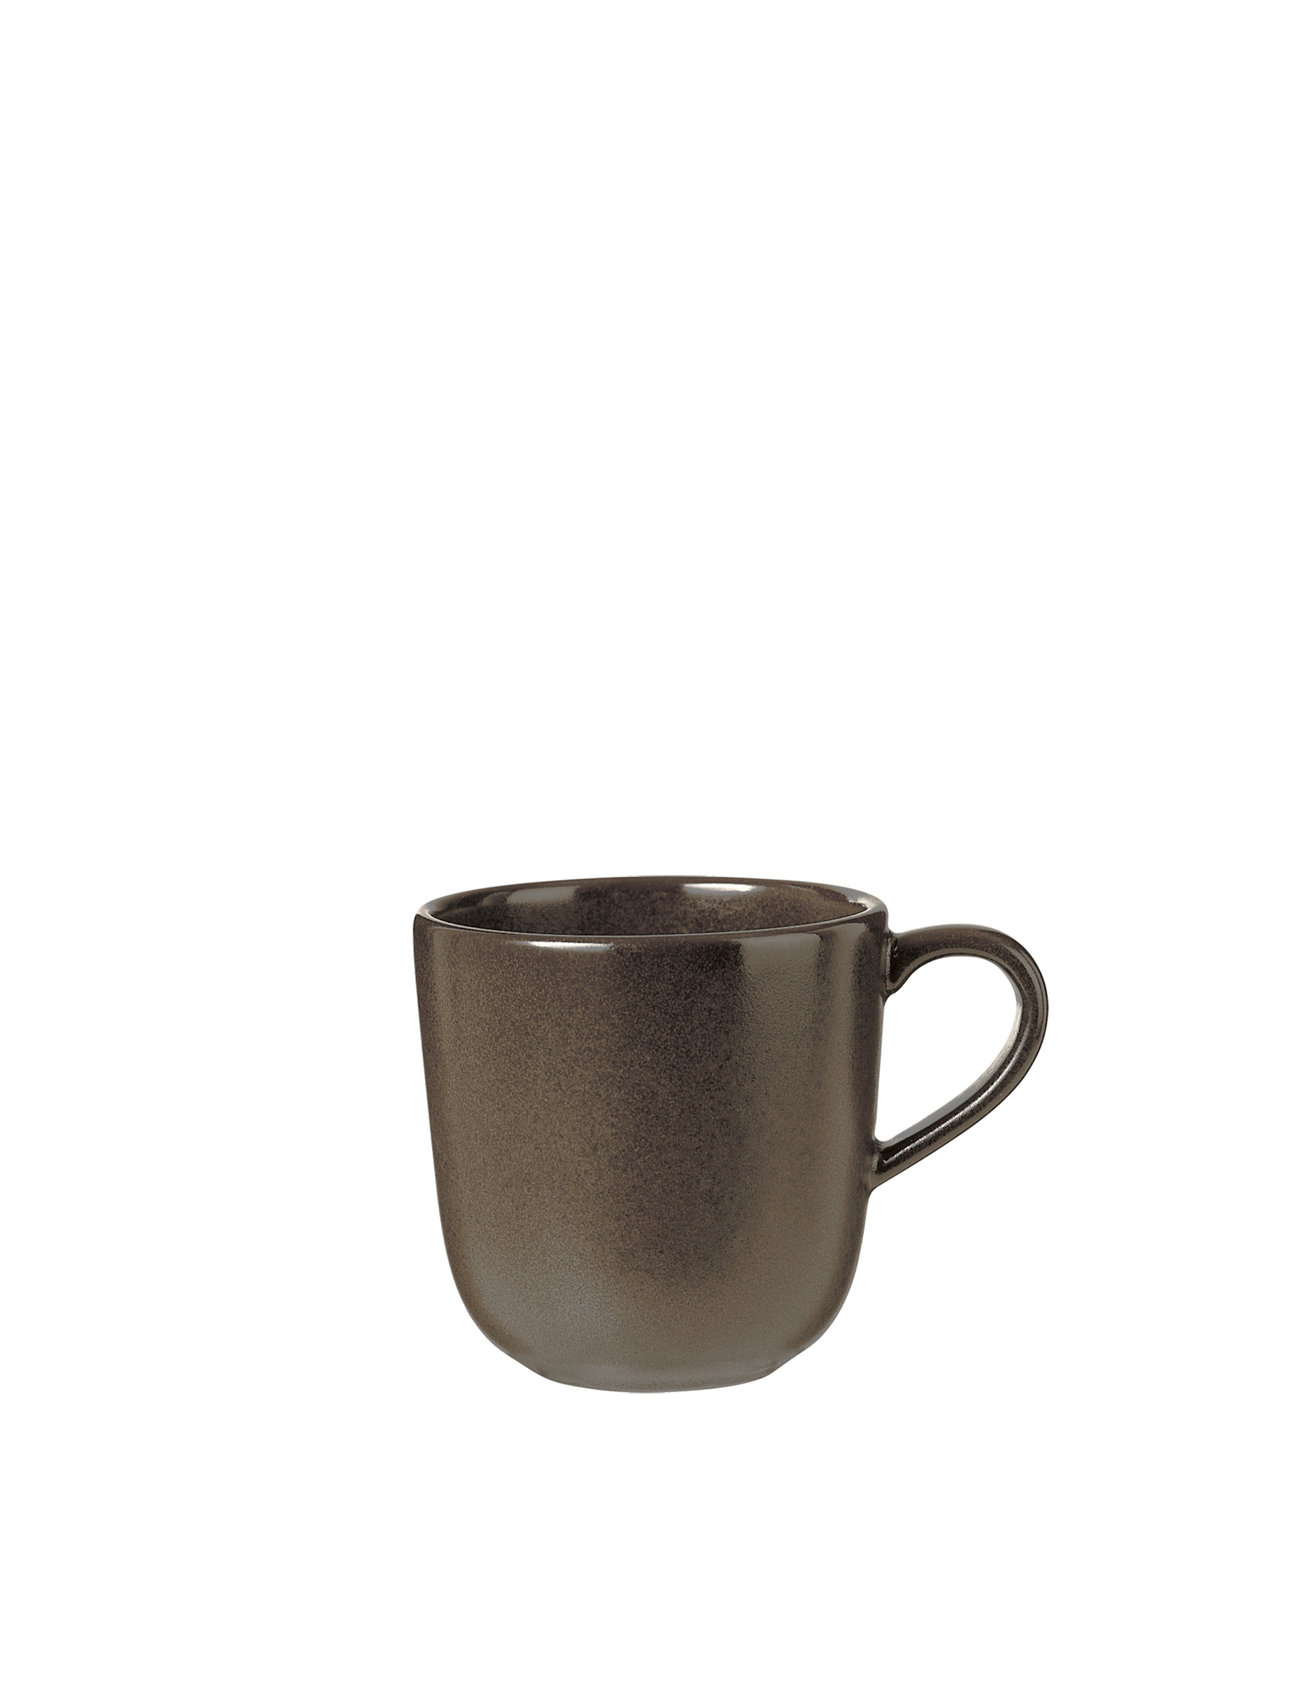 Raw Metallic Brown - Coffee Mug Home Tableware Cups & Mugs Coffee Cups Brown Aida